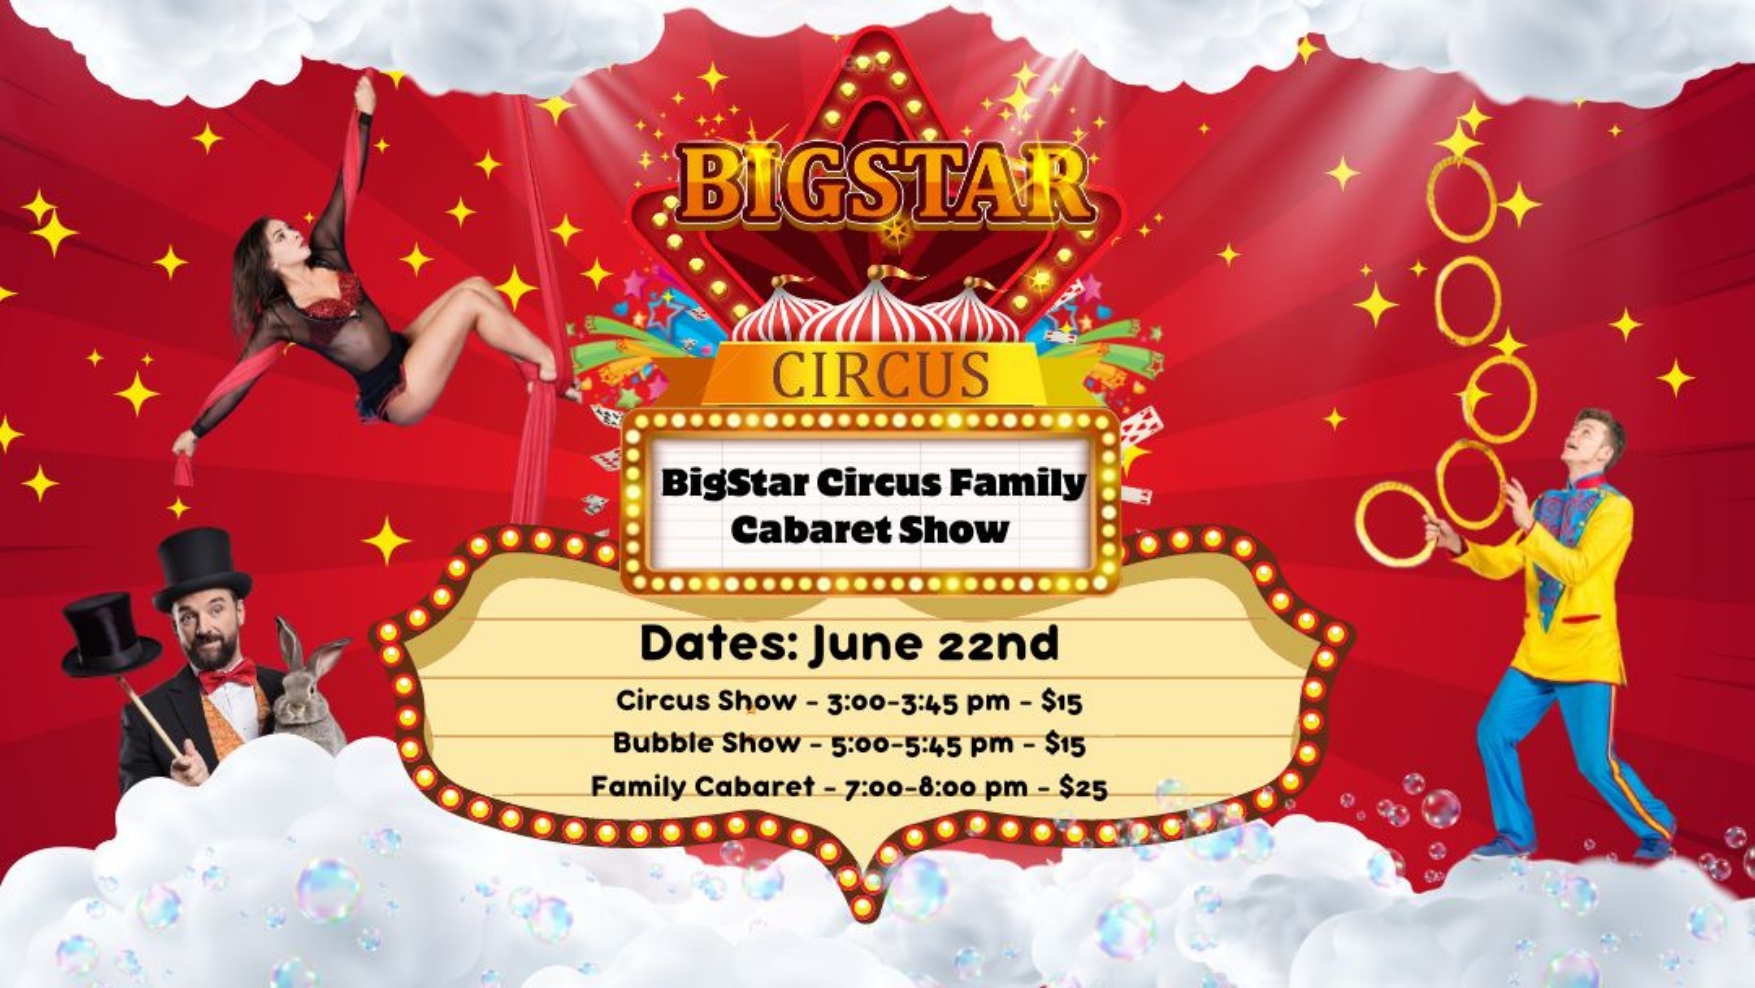 BigStar Circus Family Cabaret Show